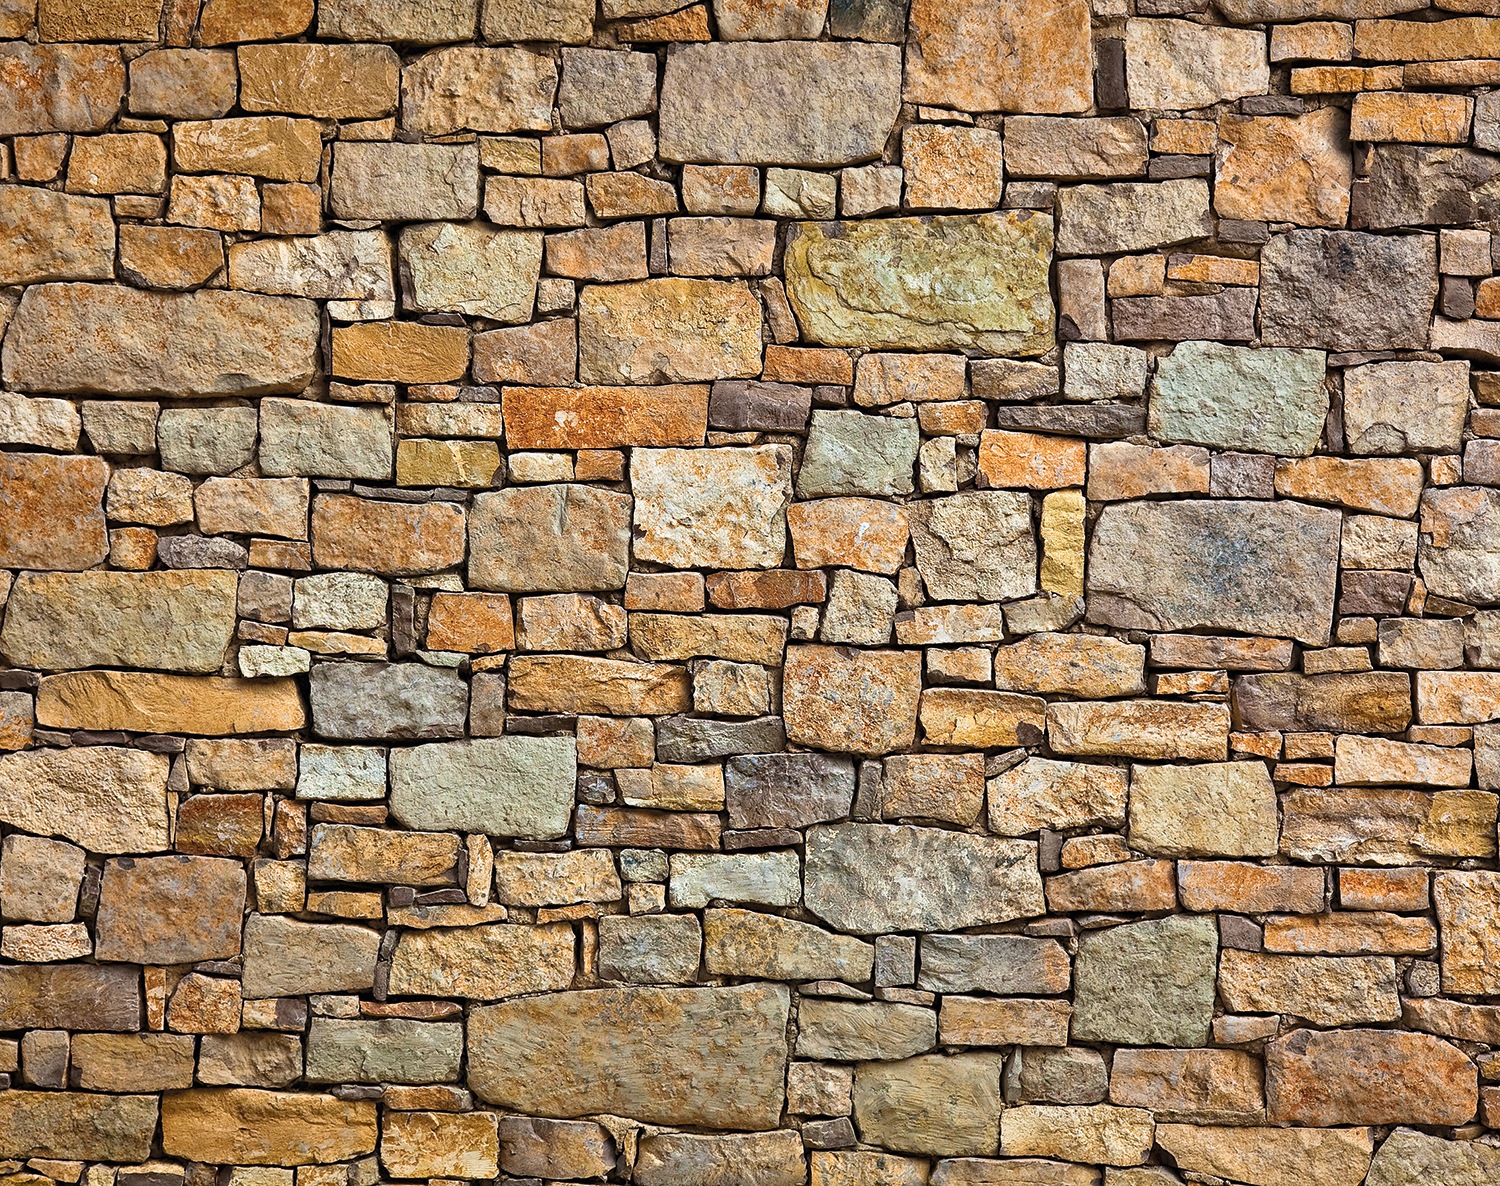 Papermoon Fototapete »Stone Wall«